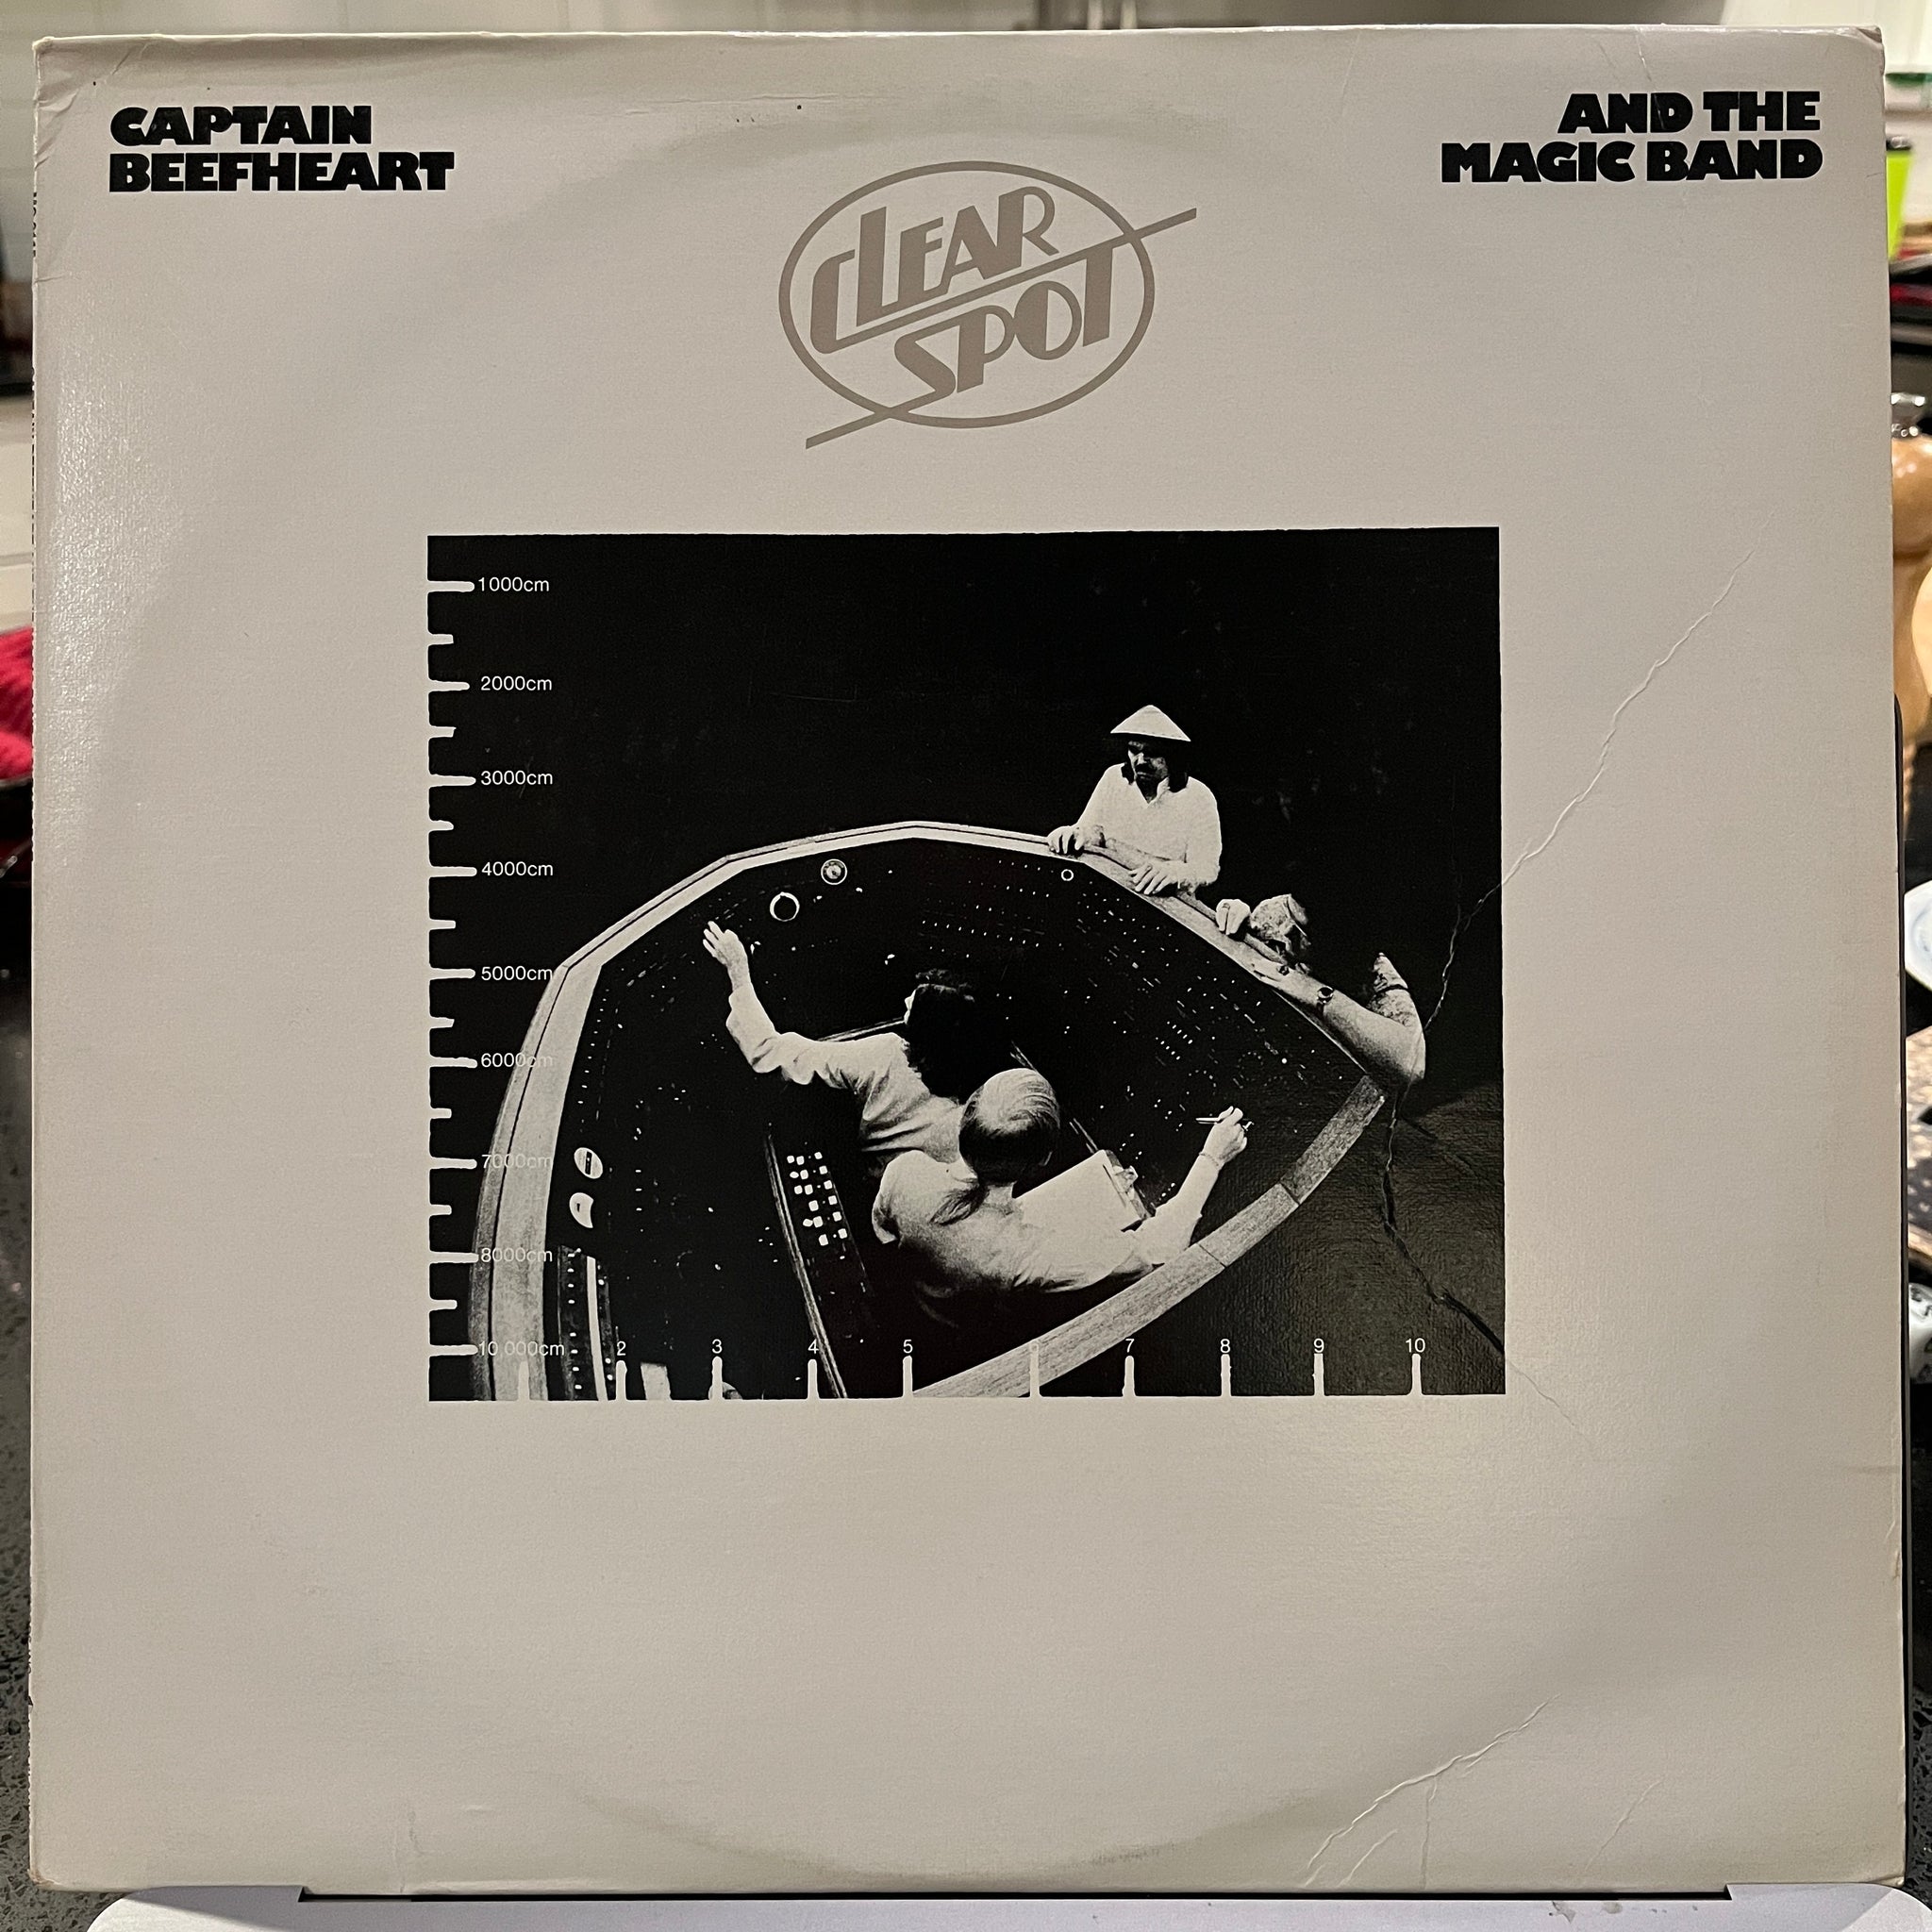 CAPTAIN BEEFHEART - CLEAR SPOT - 1972 reissue